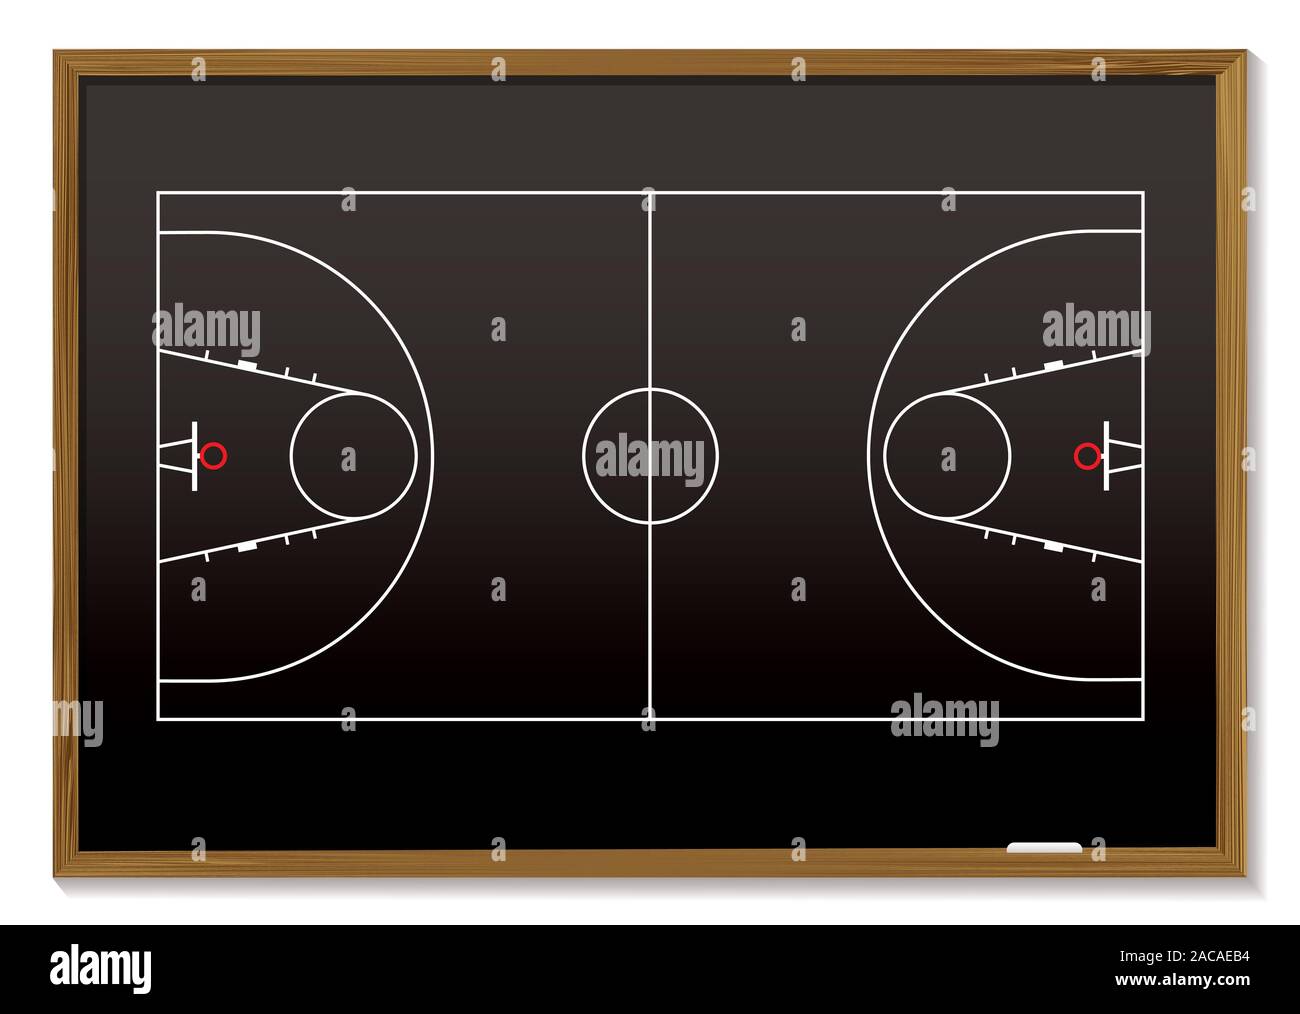 basketball blackboard Stock Photo